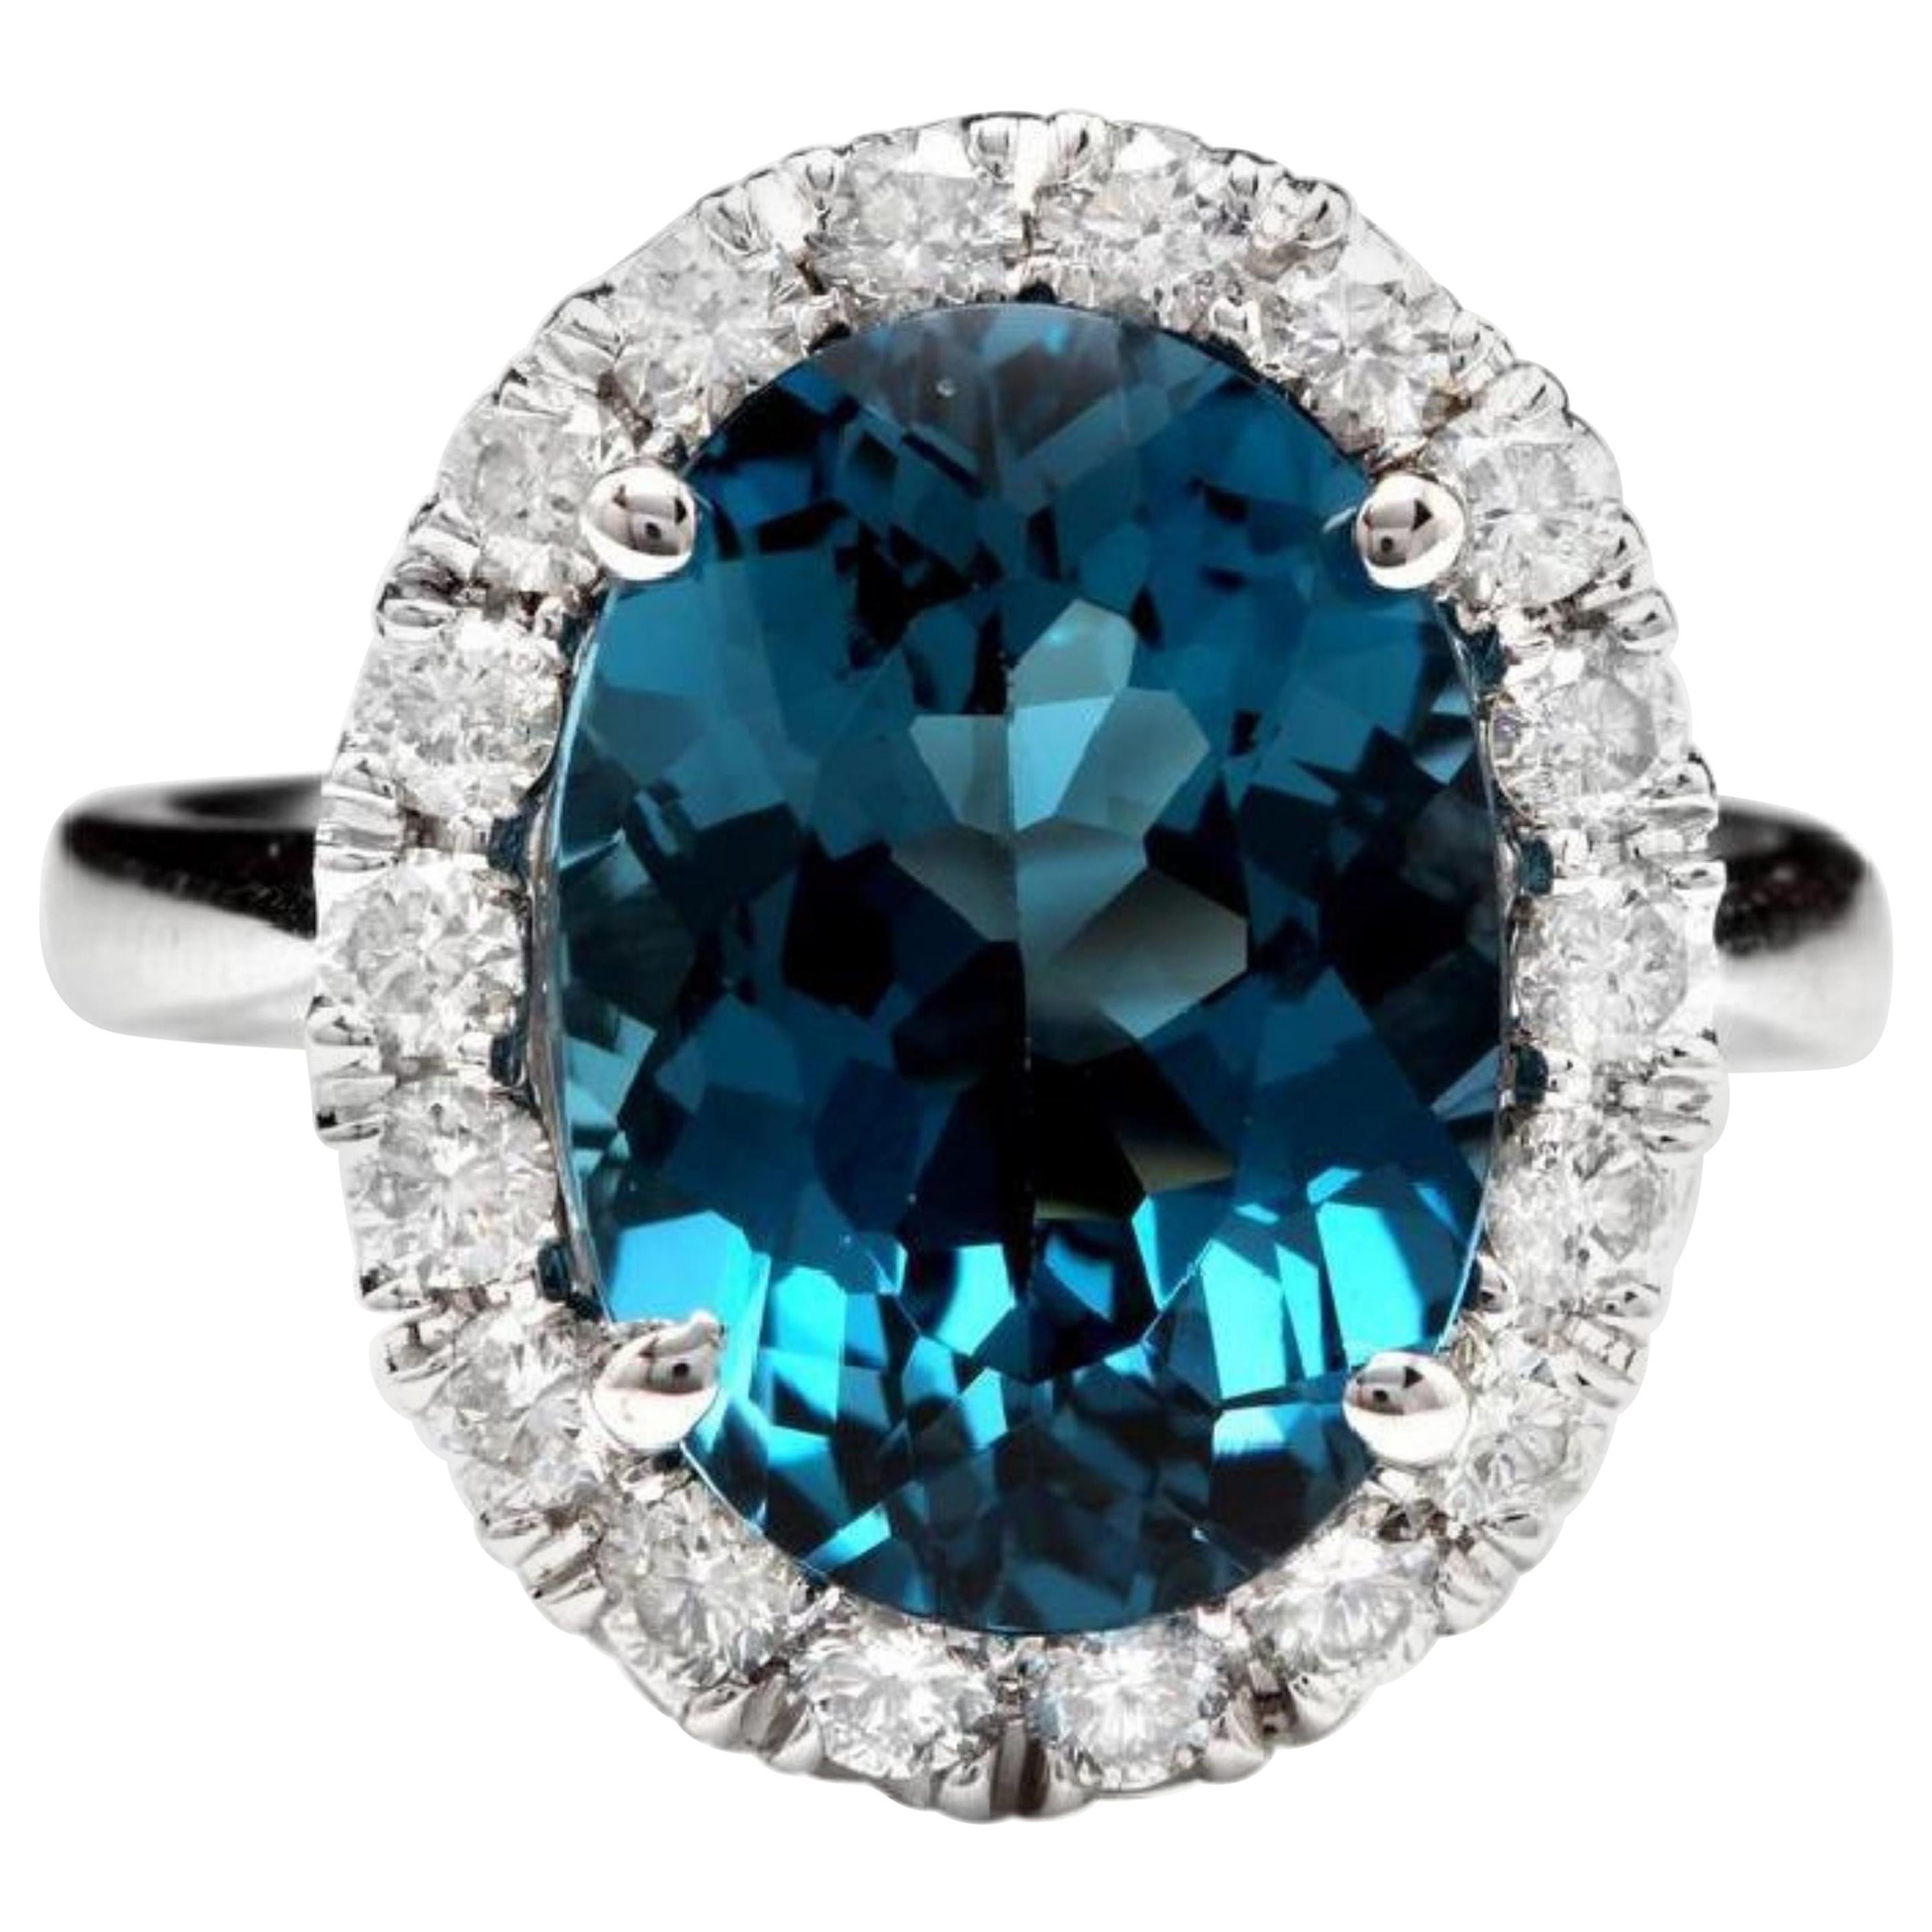 9.90 Carat Natural Impressive London Blue Topaz and Diamond 14K White Gold Ring